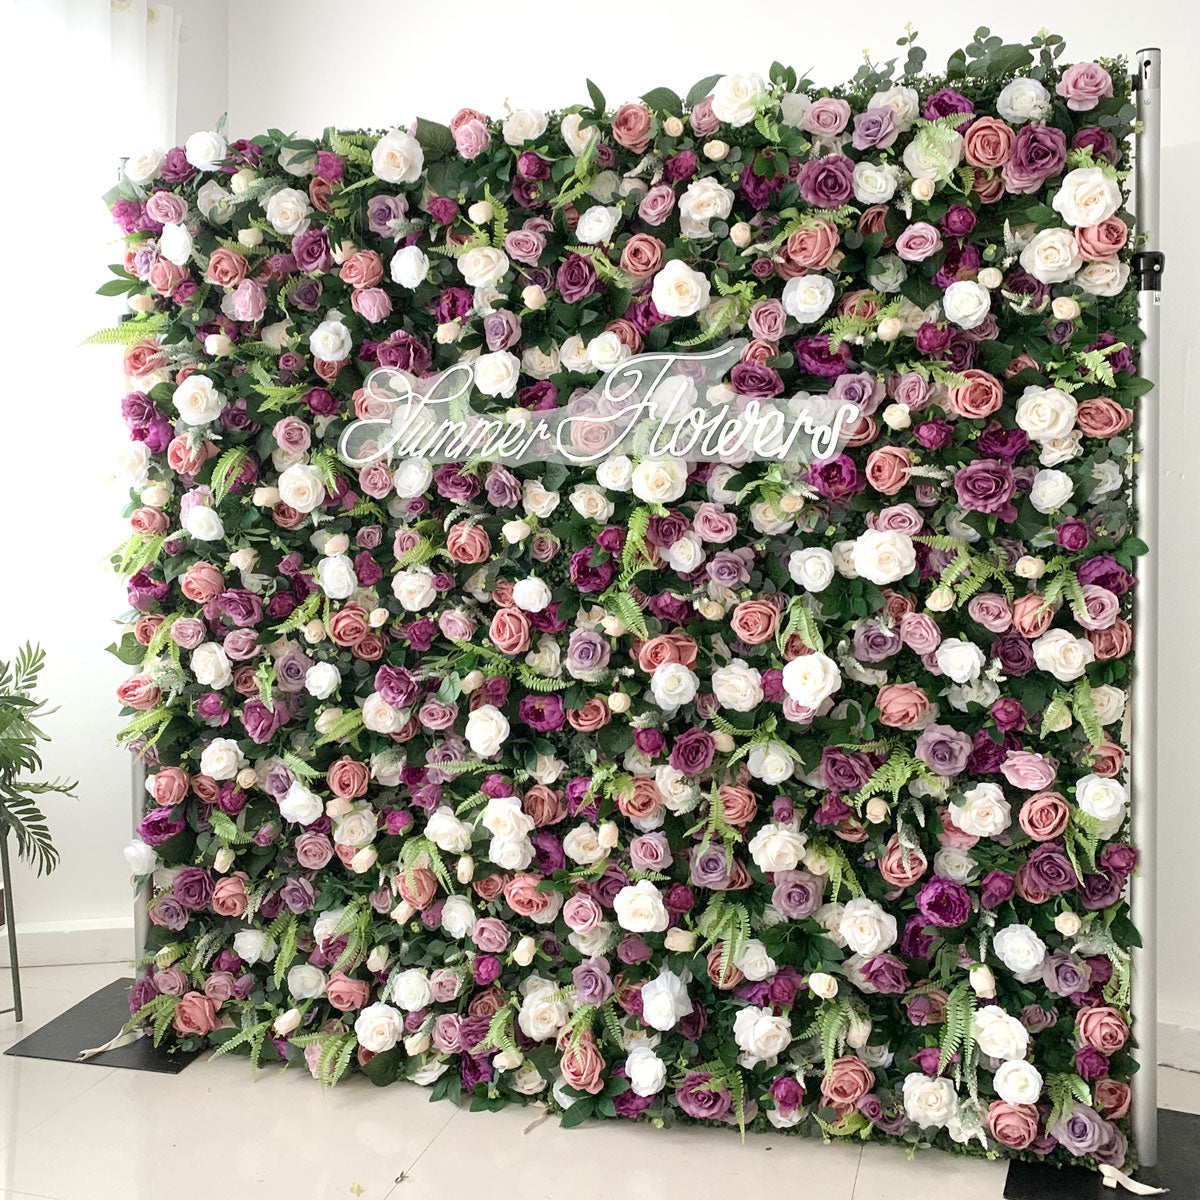 Summer Flower:CB-154 8ft*8ft Cloth Back Artificial Flower Wall Backdrop